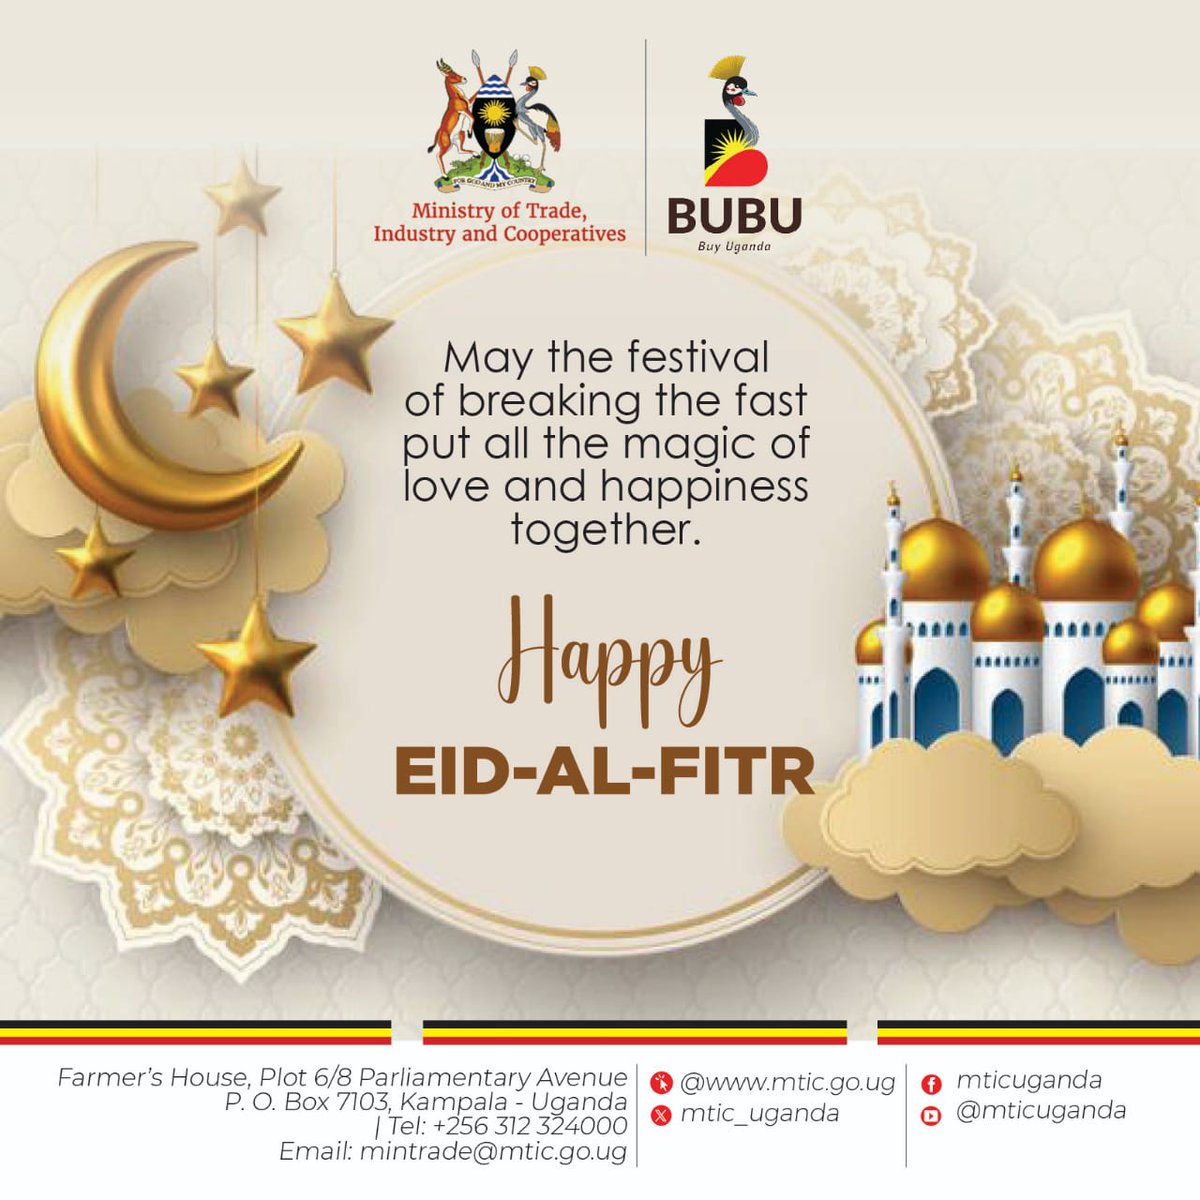 Happy Eid-Al-Fitr to you all.